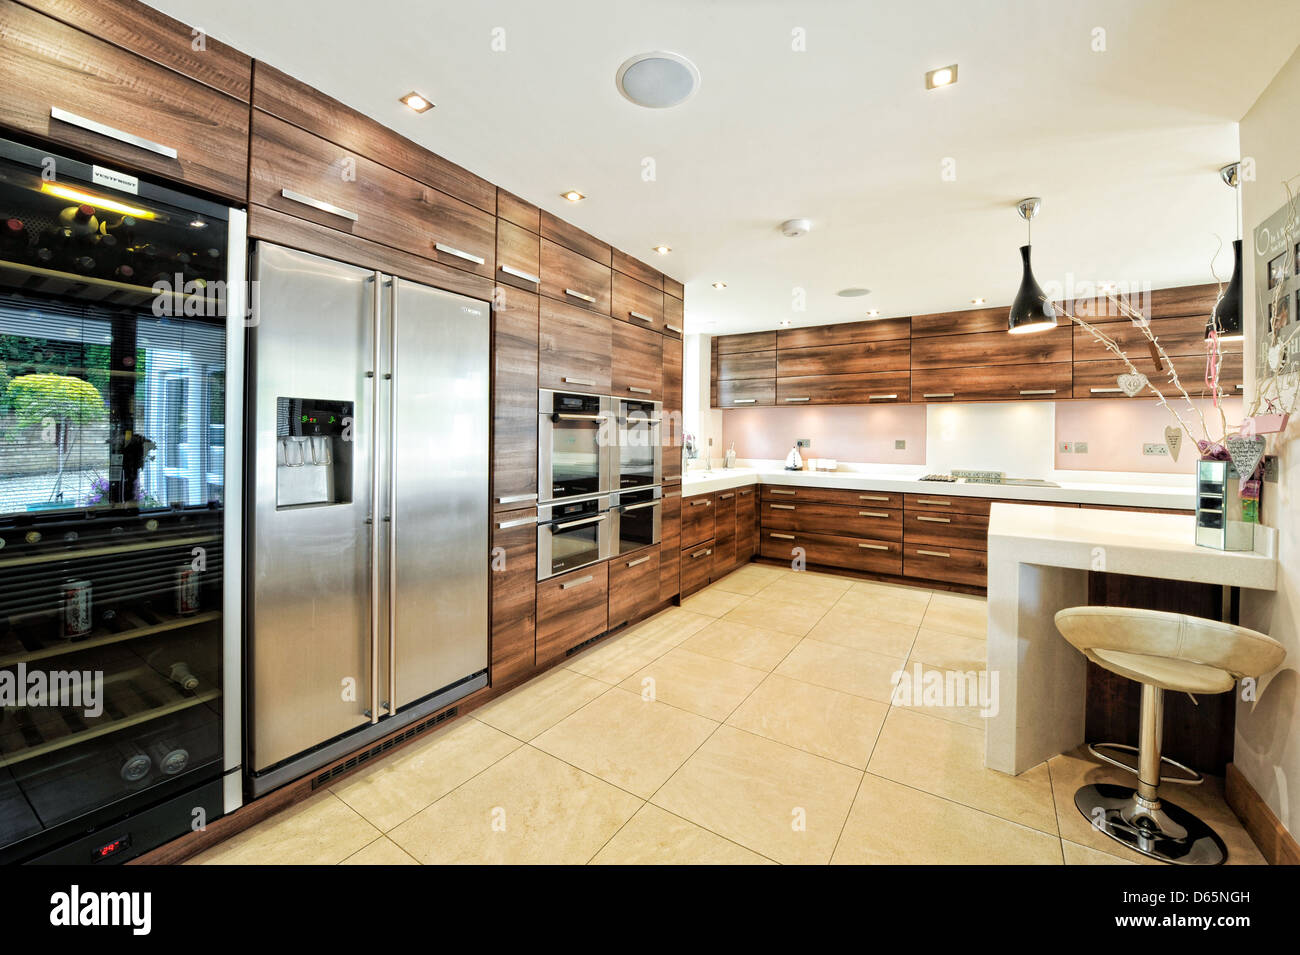 A Modern Domestic Kitchen Stock Photo